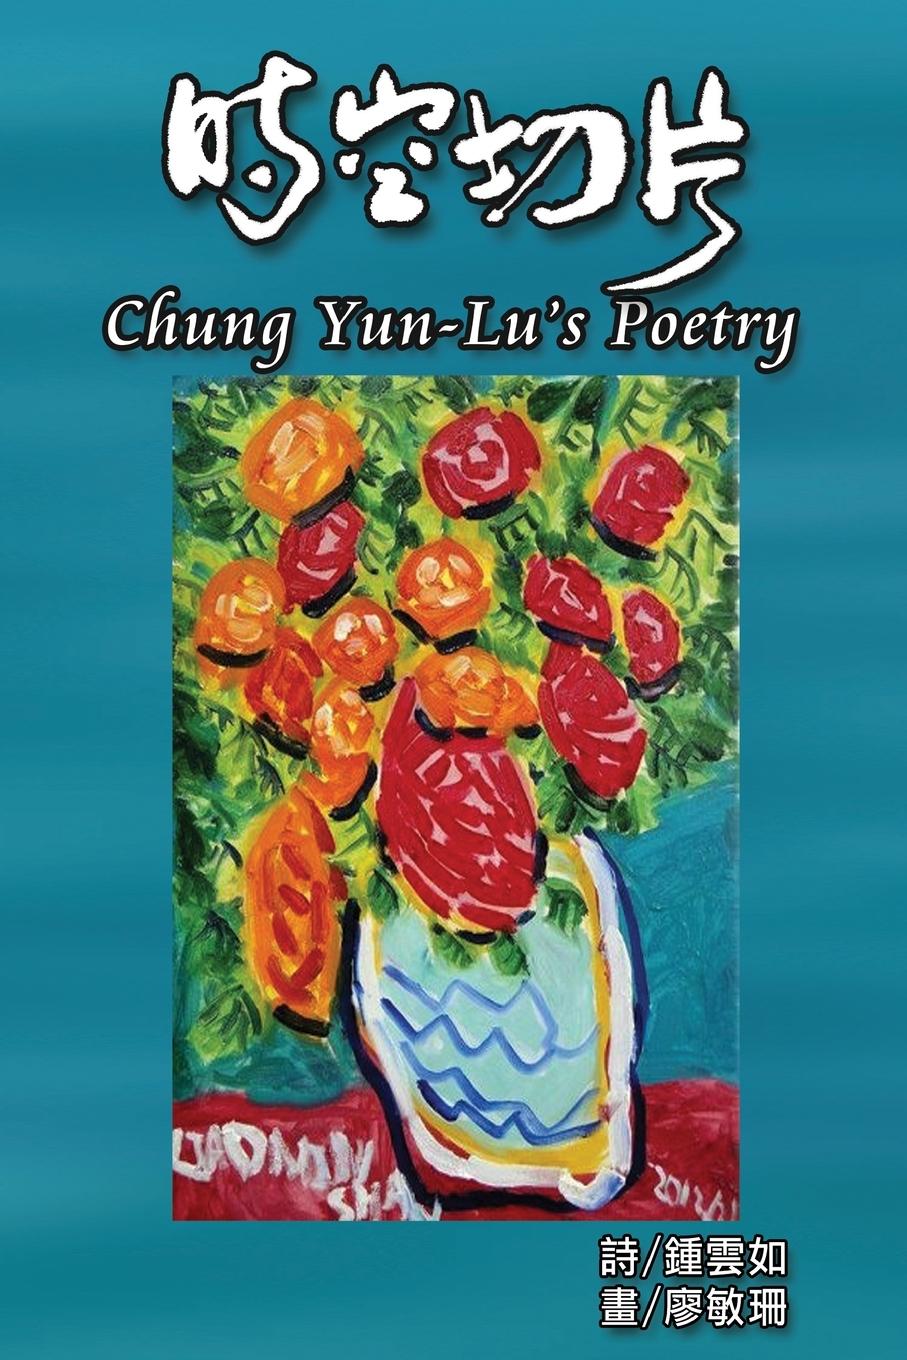 Kniha Chung Yun-Lu's Poetry ???